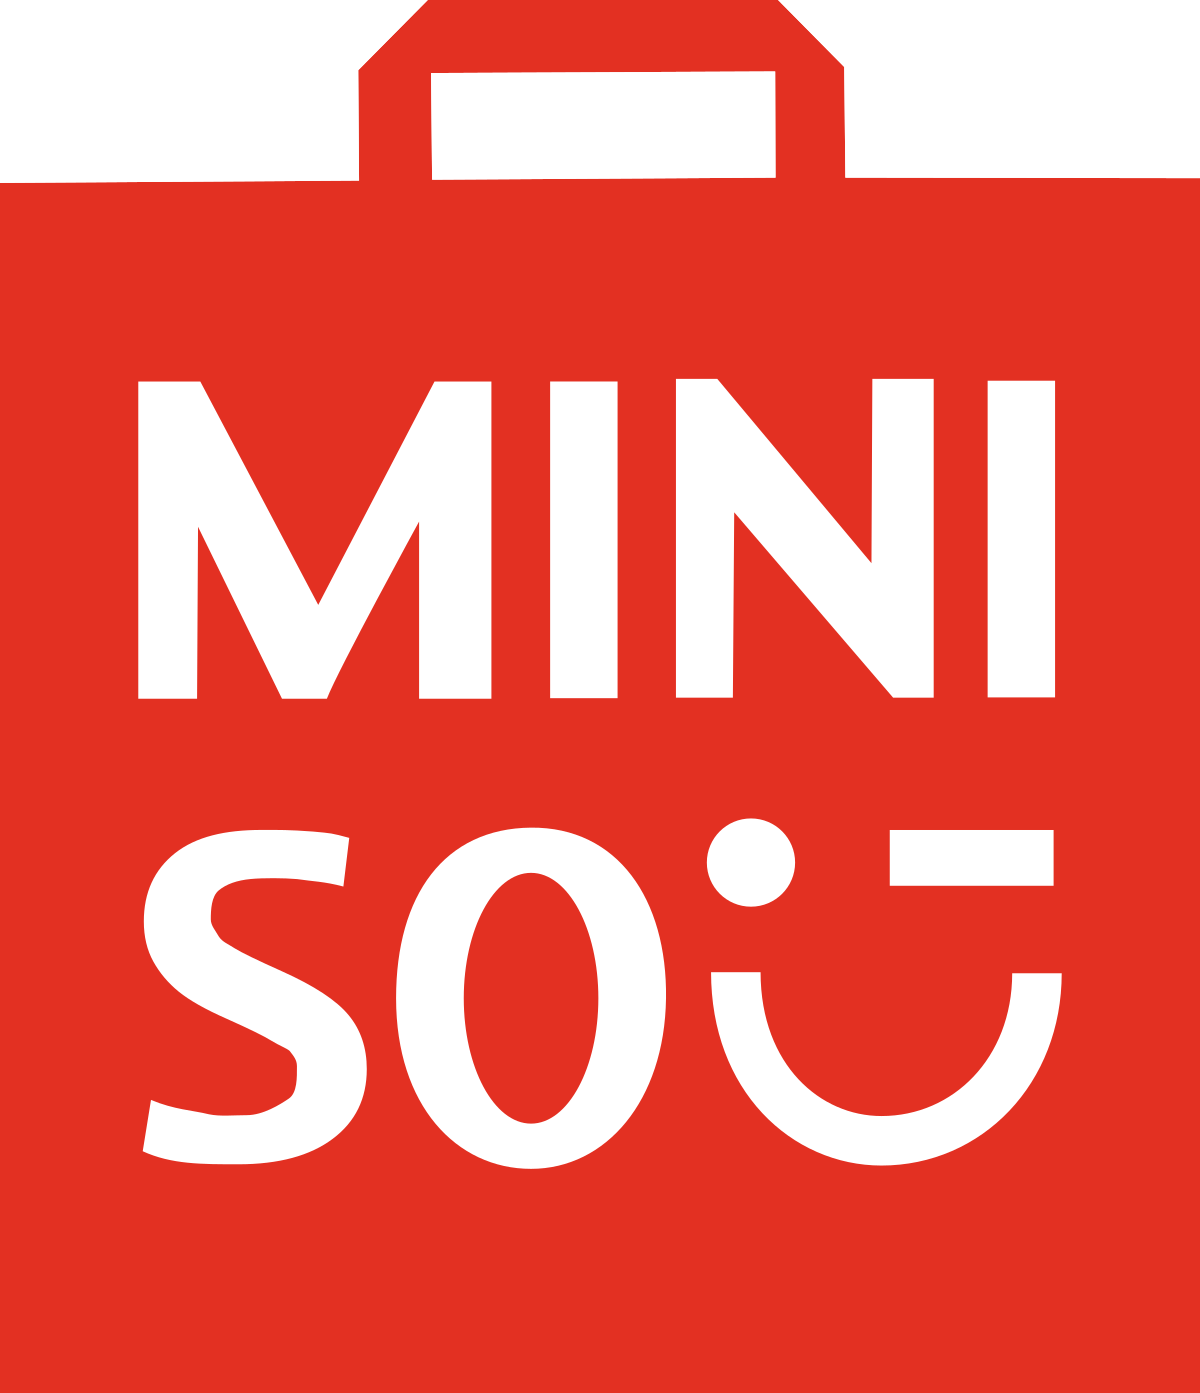 MINISO logo, Get Us PPE partner